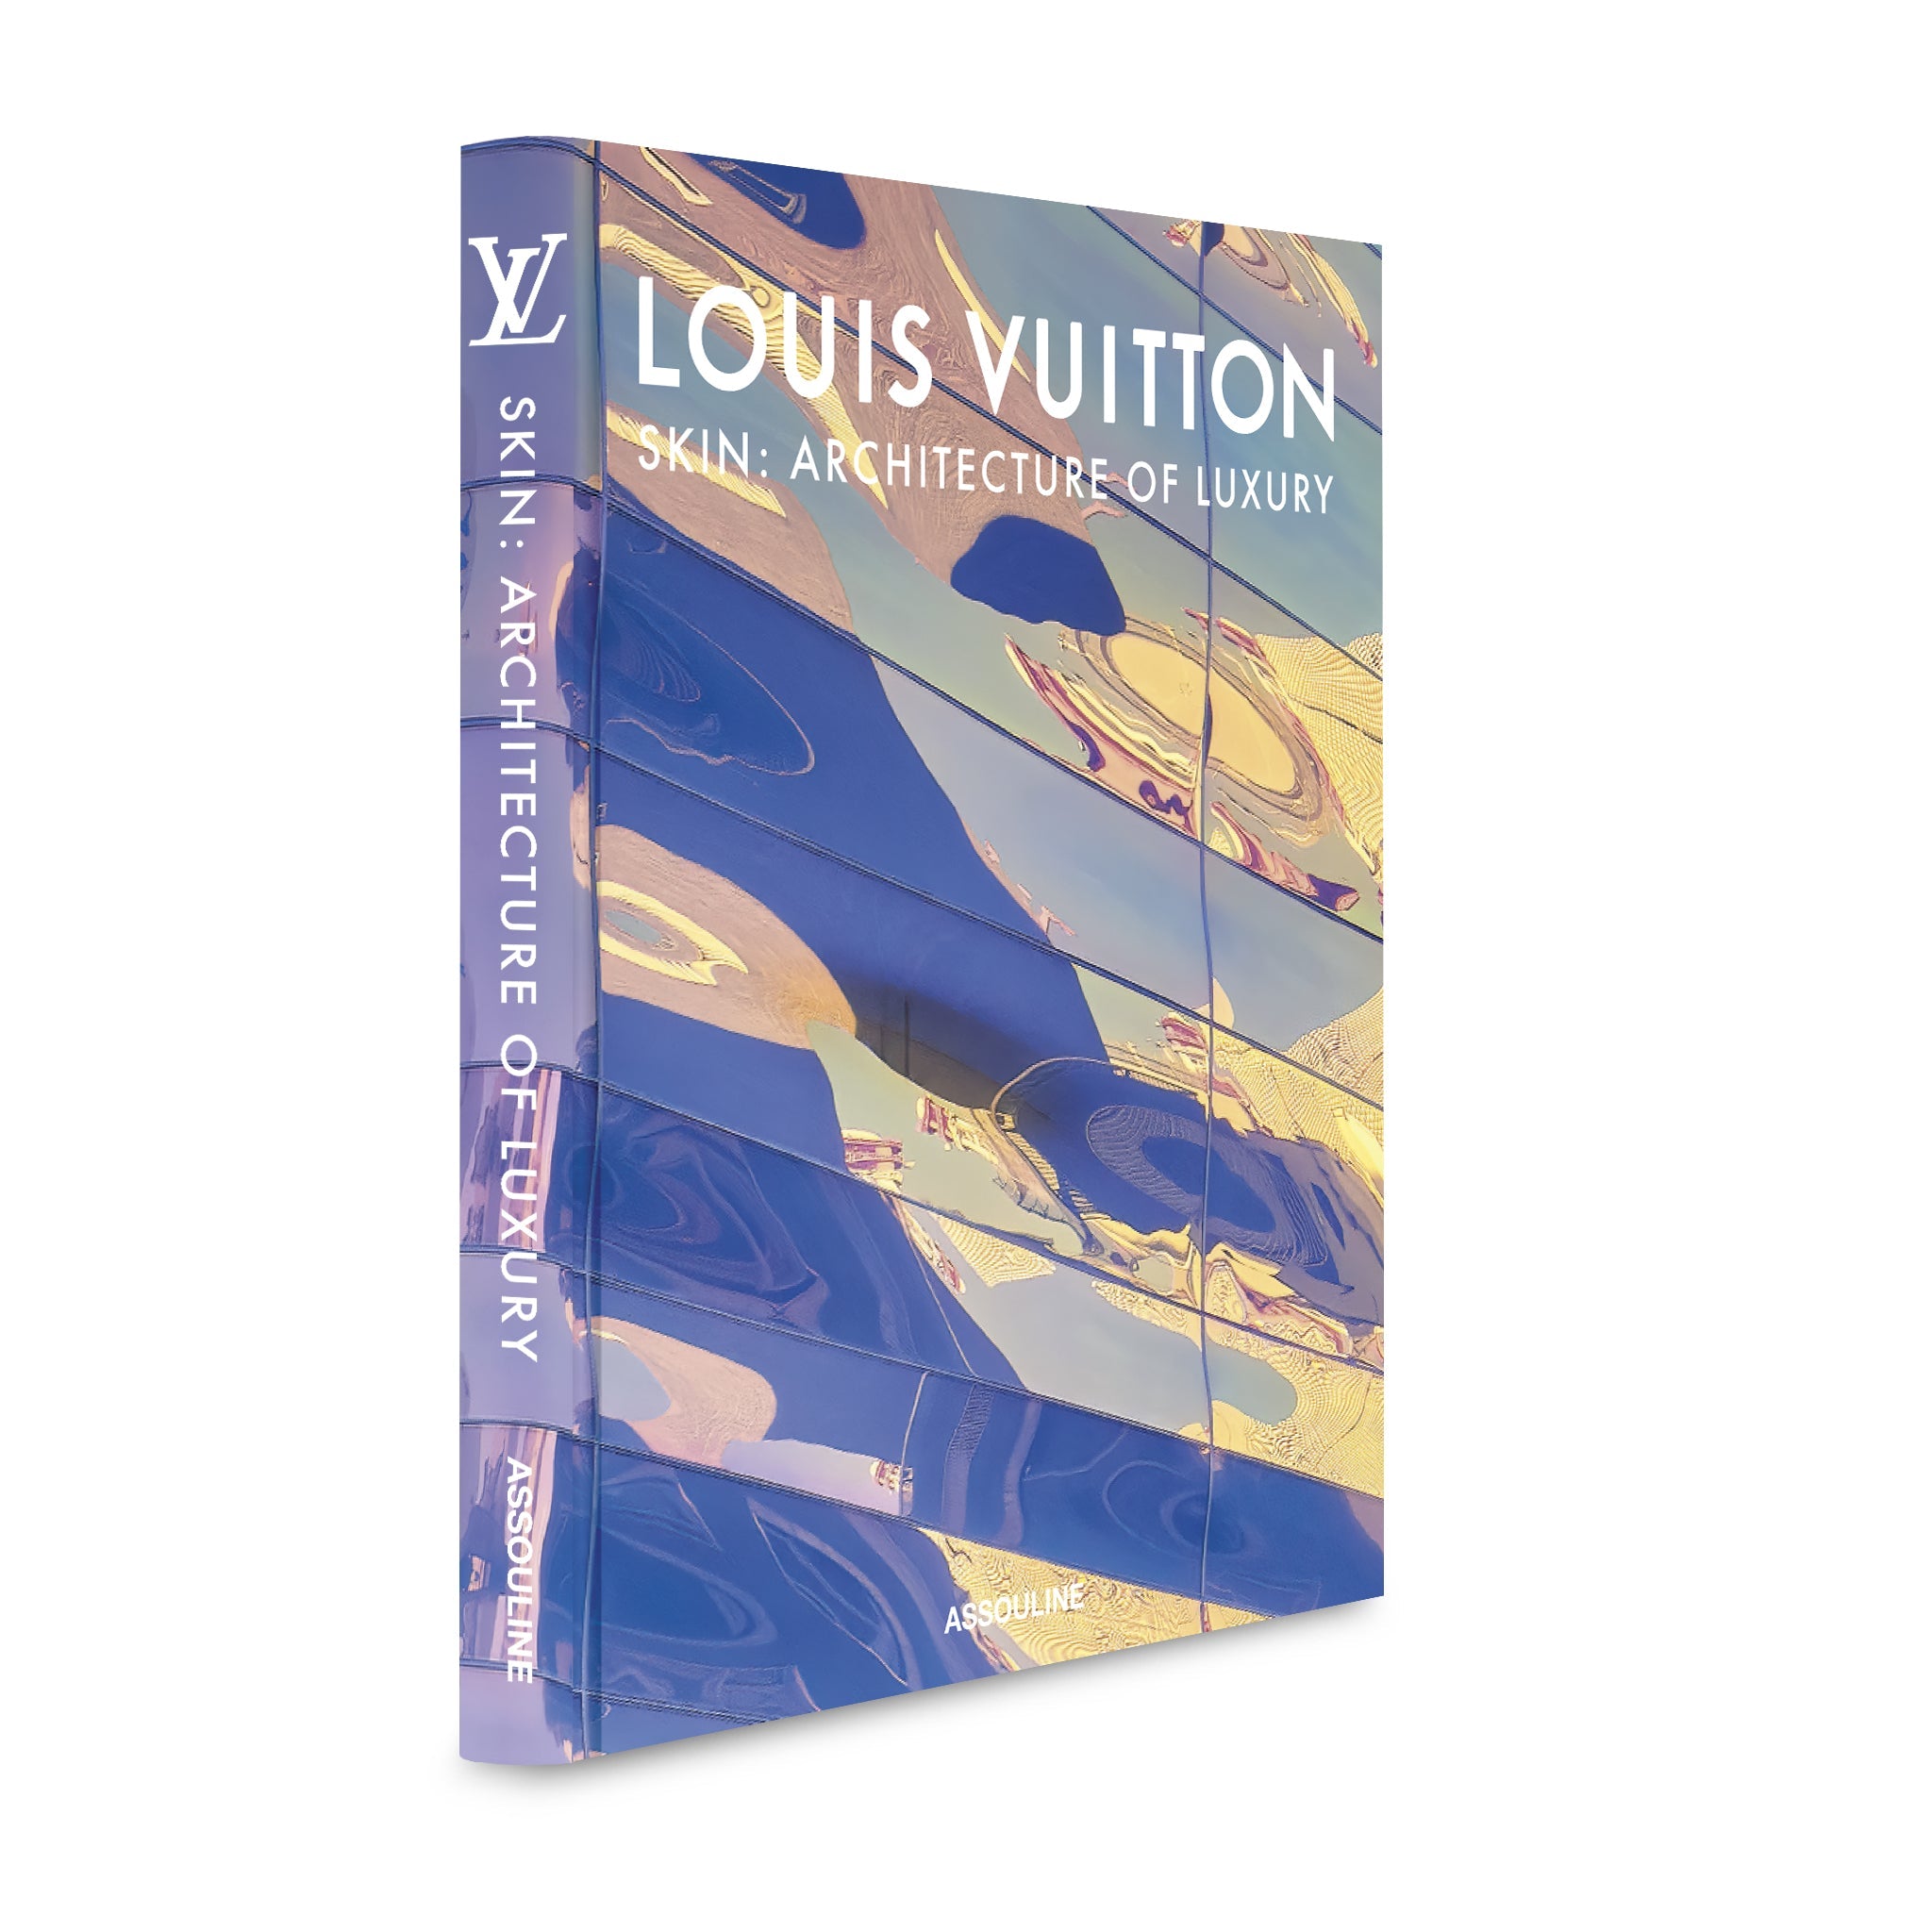 ASSOULINE Louis Vuitton Skin: Architecture of Luxury (Paris Edition)